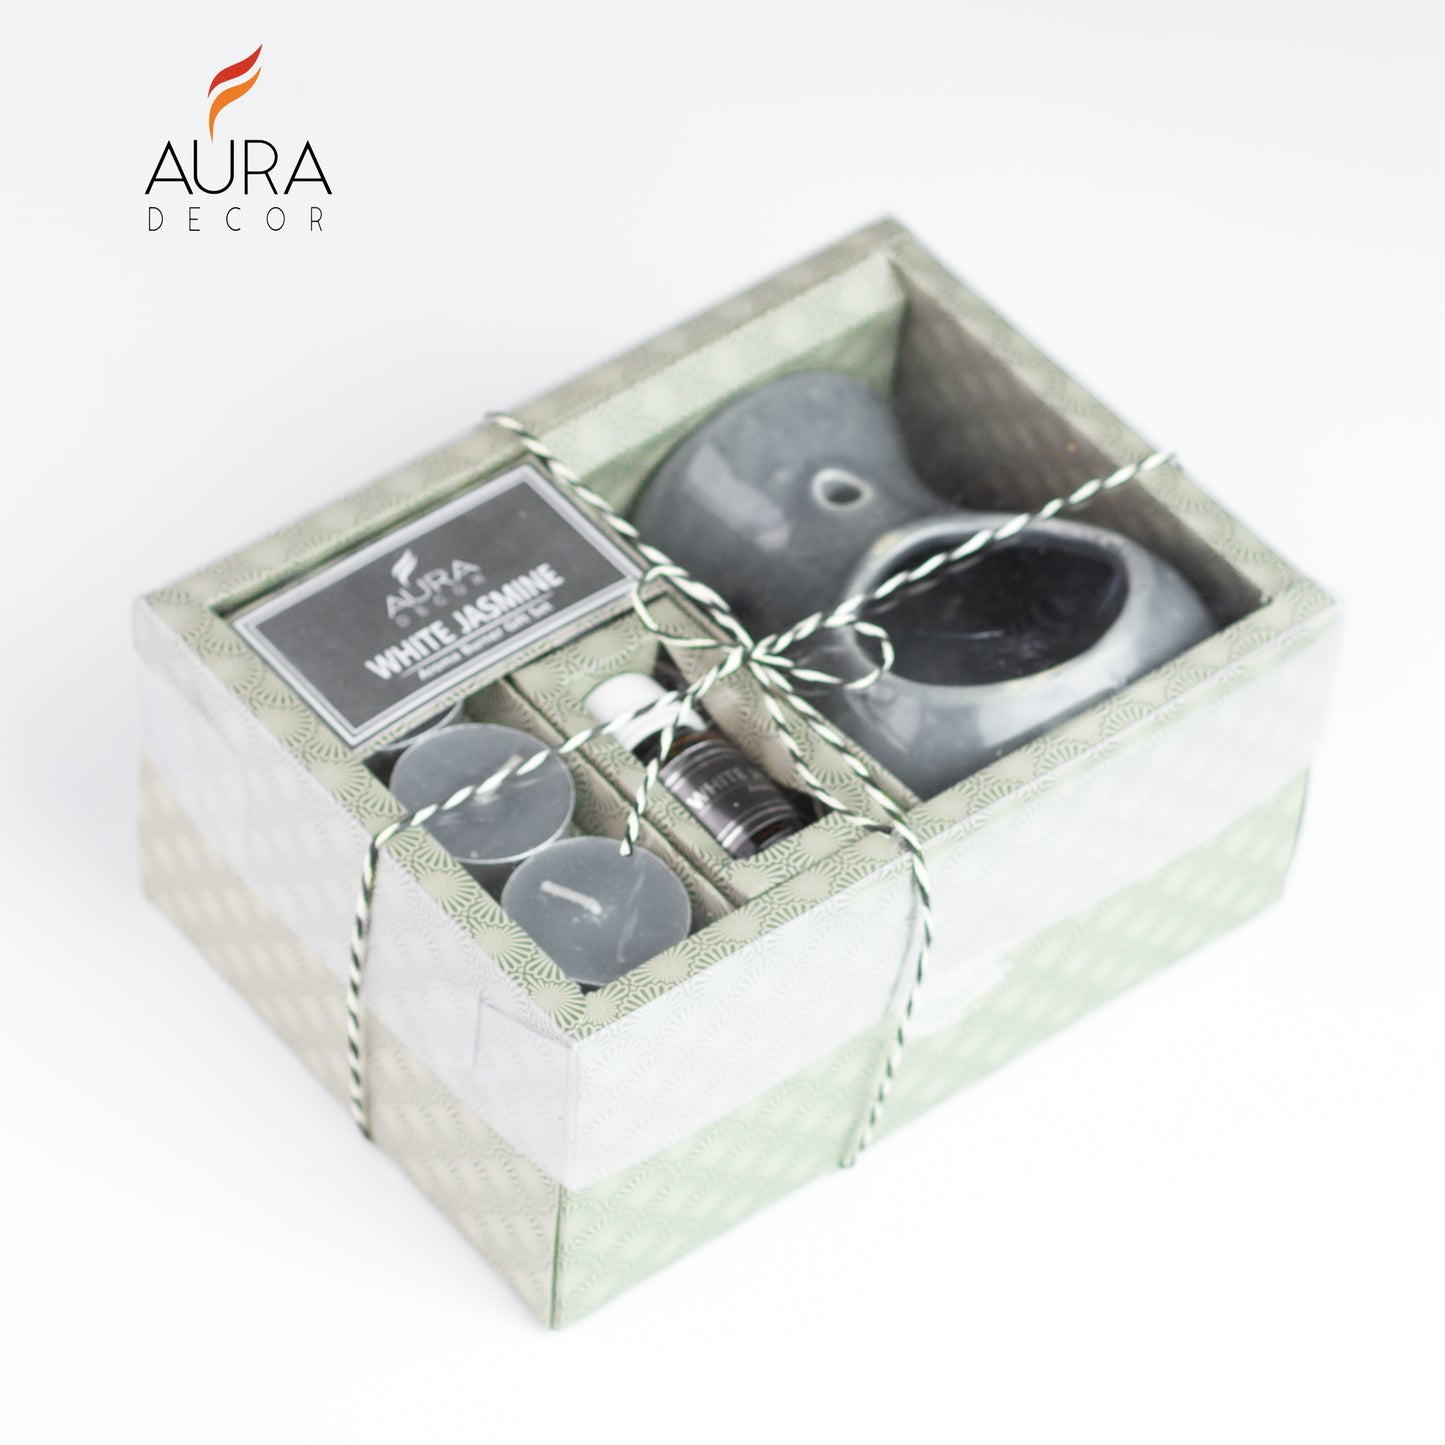 AuraDecor Aroma Diffuser Gift Set ( Jasmine fragrance ) GS-10